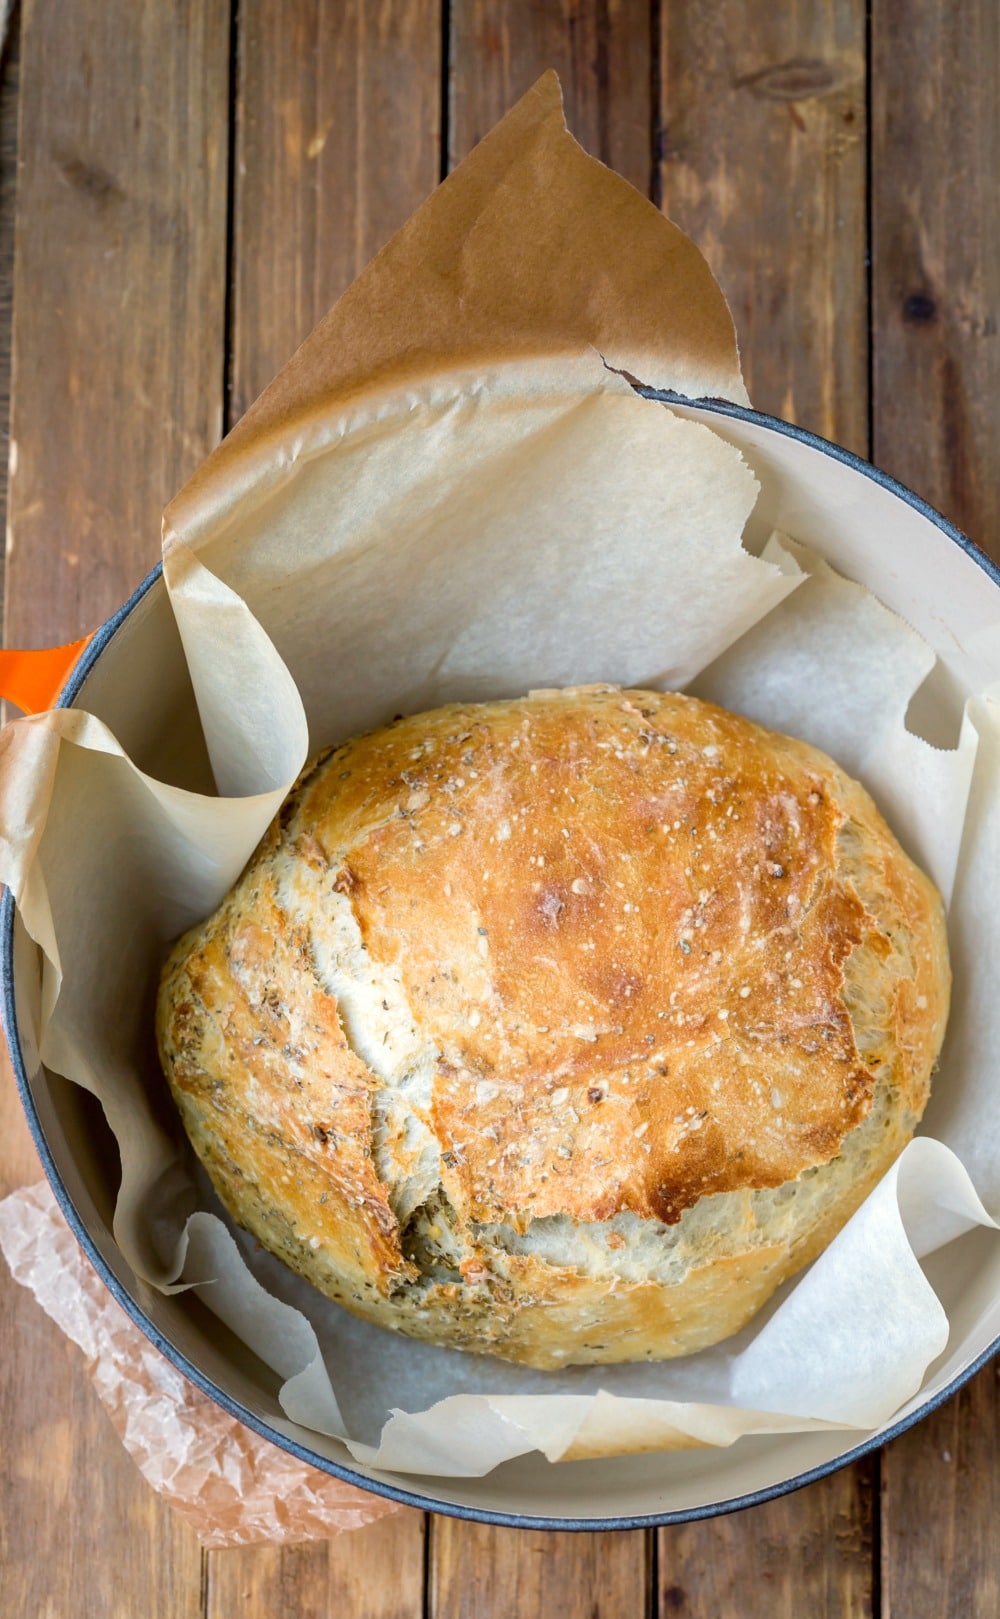 https://www.ihearteating.com/wp-content/uploads/2014/10/garlic-herb-no-knead-bread-1000.jpg